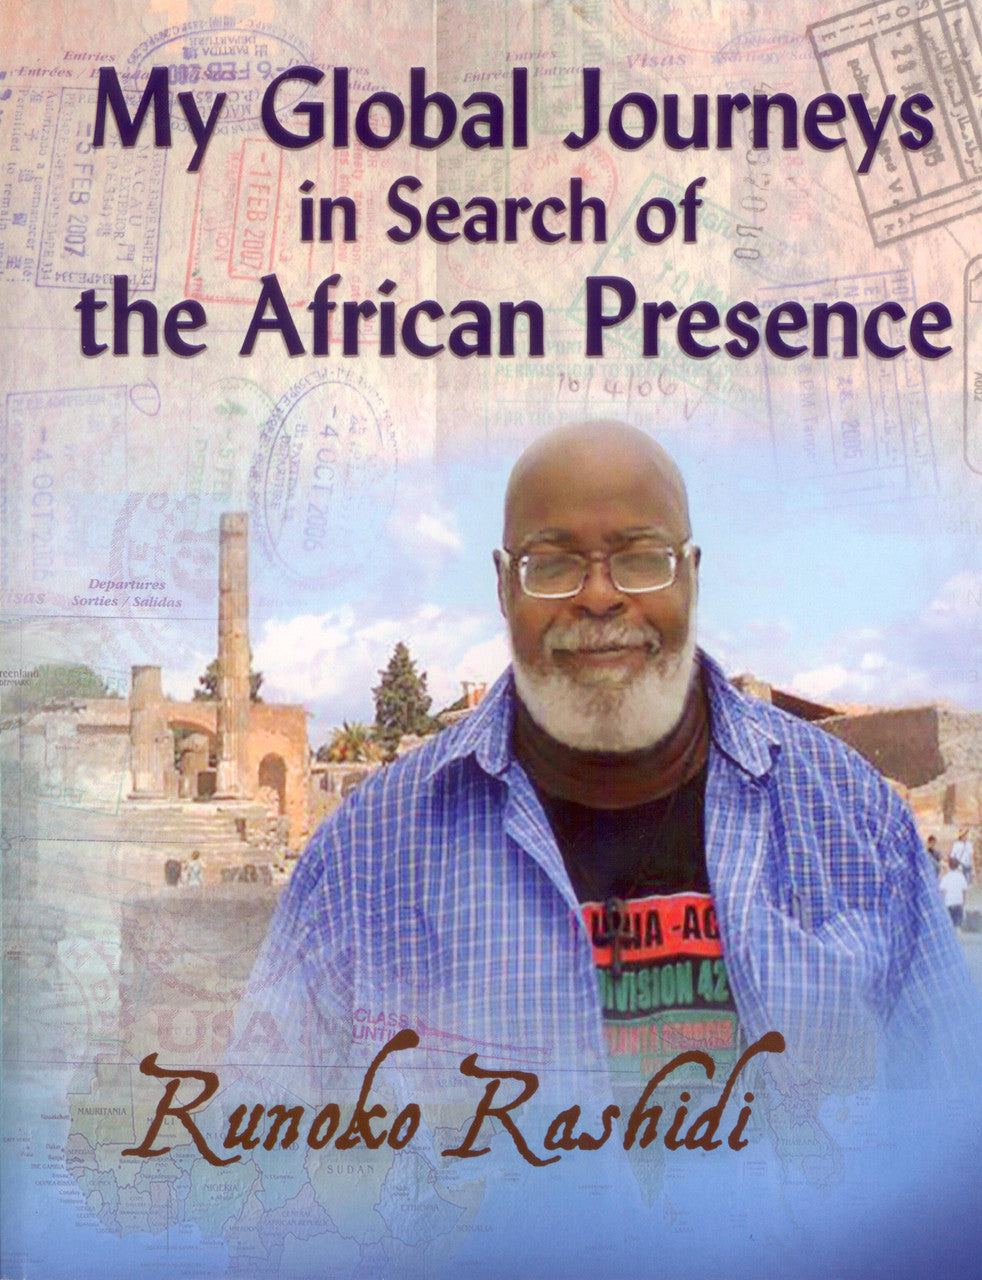 My Global Journeys in Search of the African Presence by Runoko Rashidi